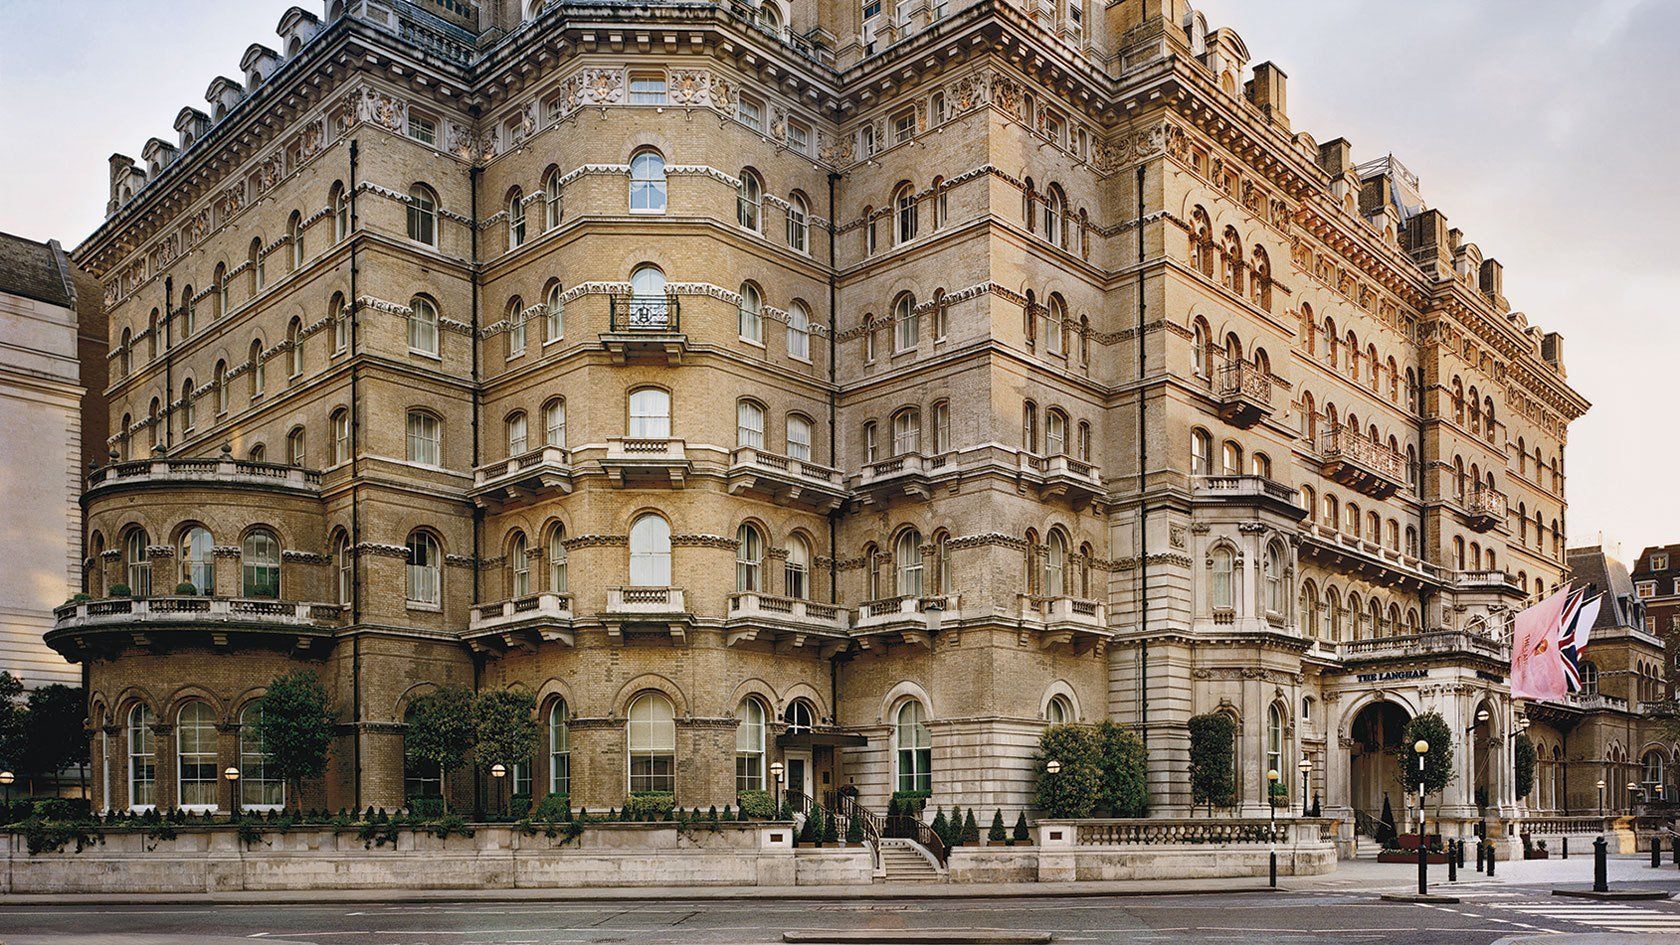 The Langham Hotel in London